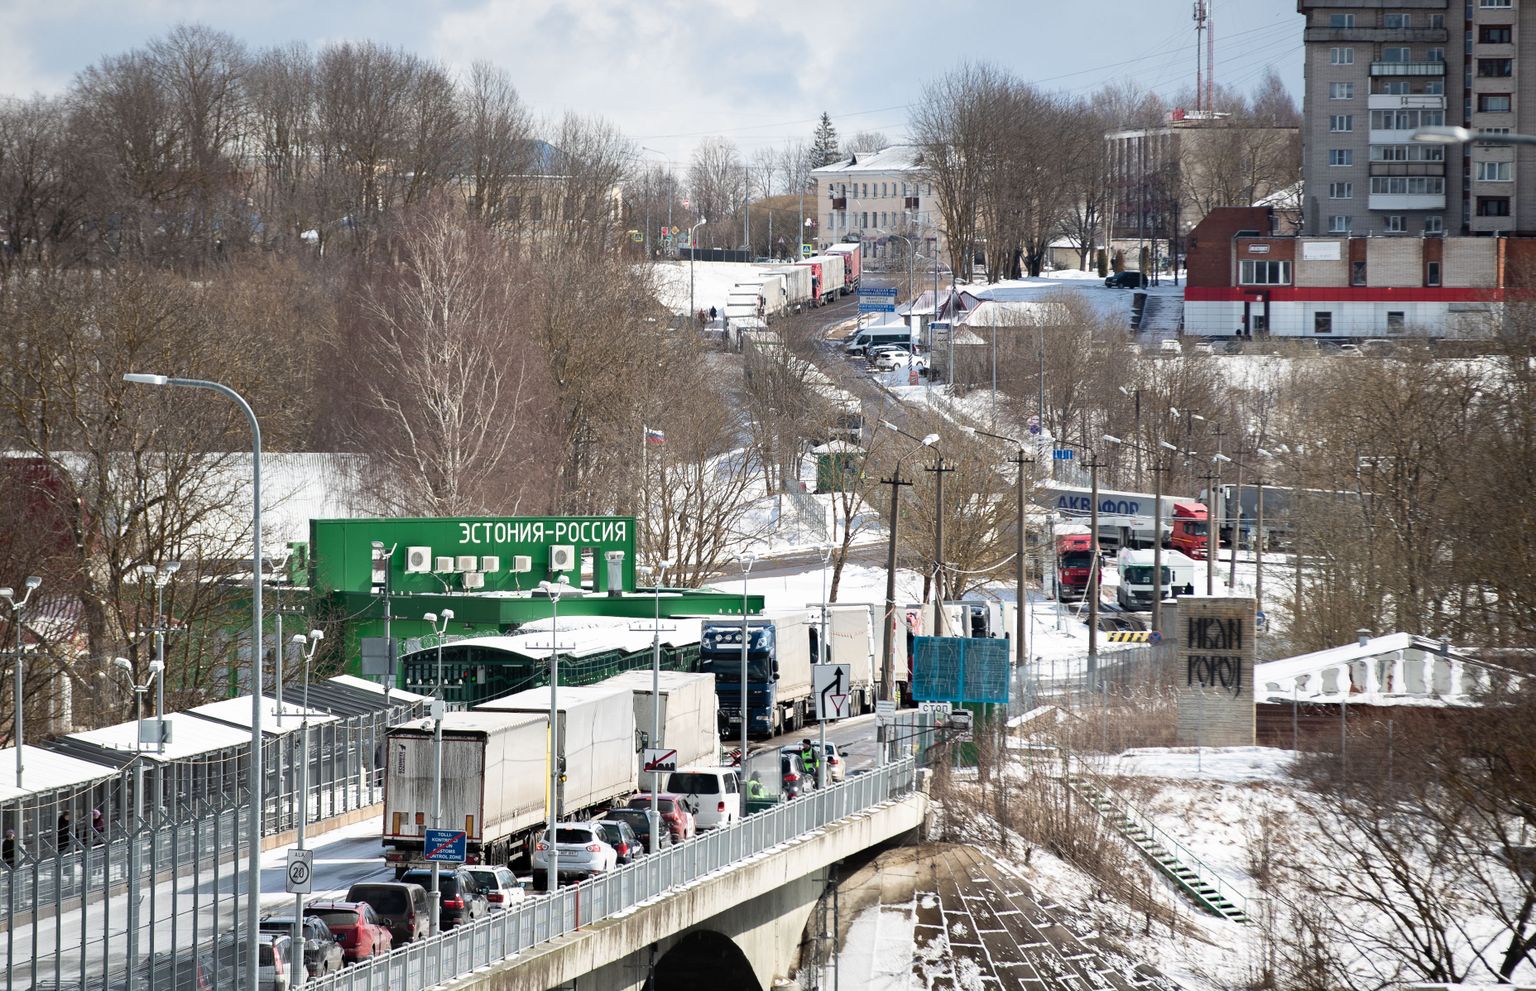 Kaubaautode järjekord Narva piiripunktis.